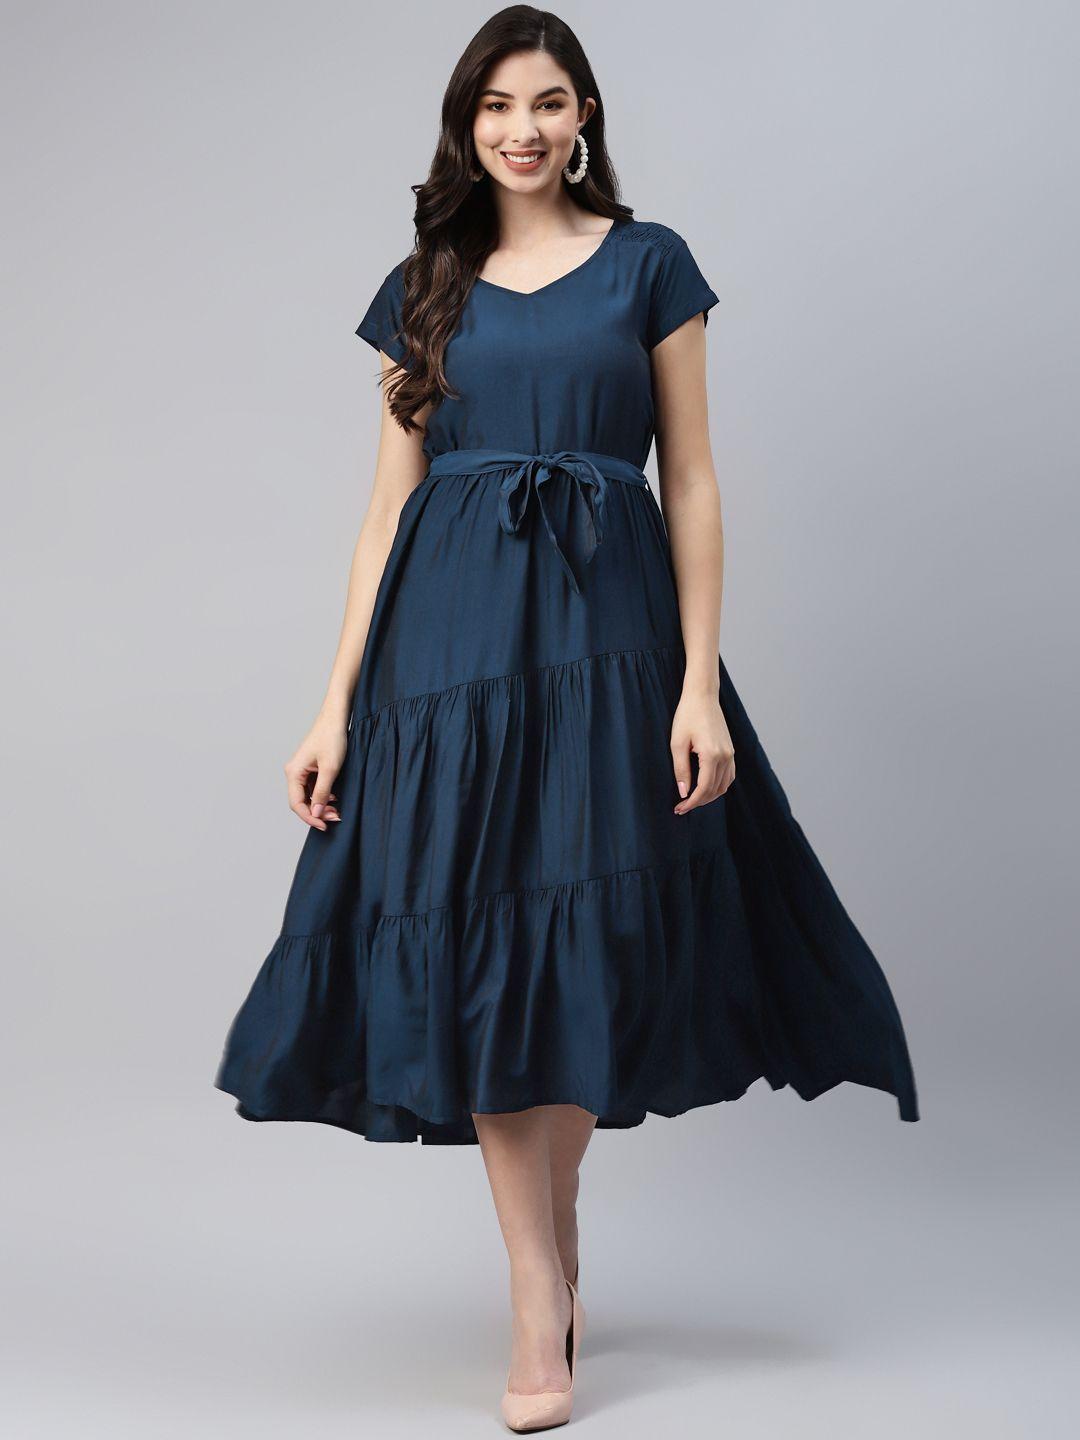 aarika navy blue a-line midi dress